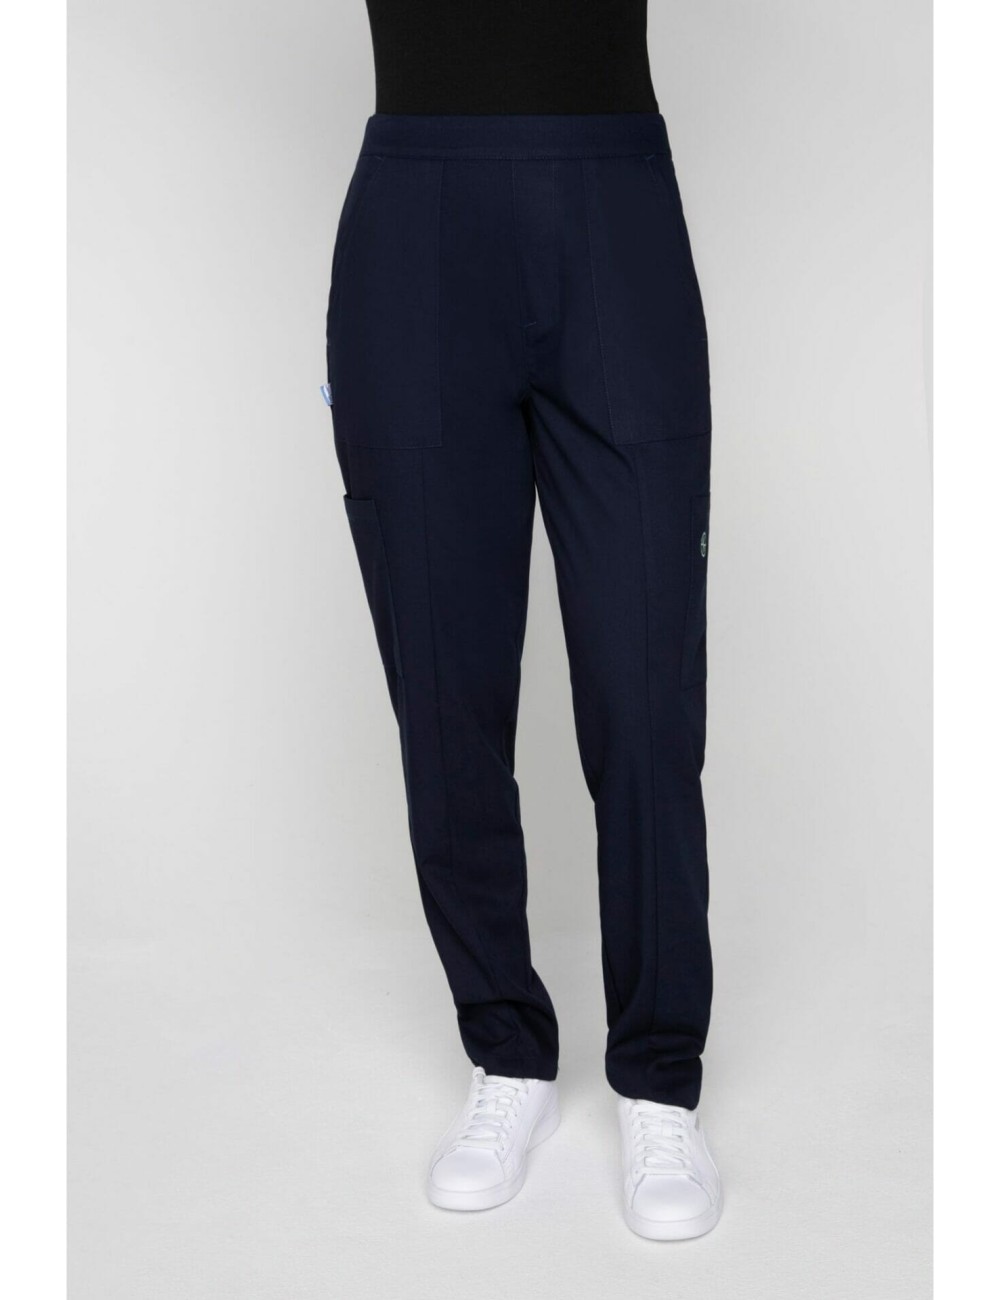 AVA - High waist pant in twill fabric